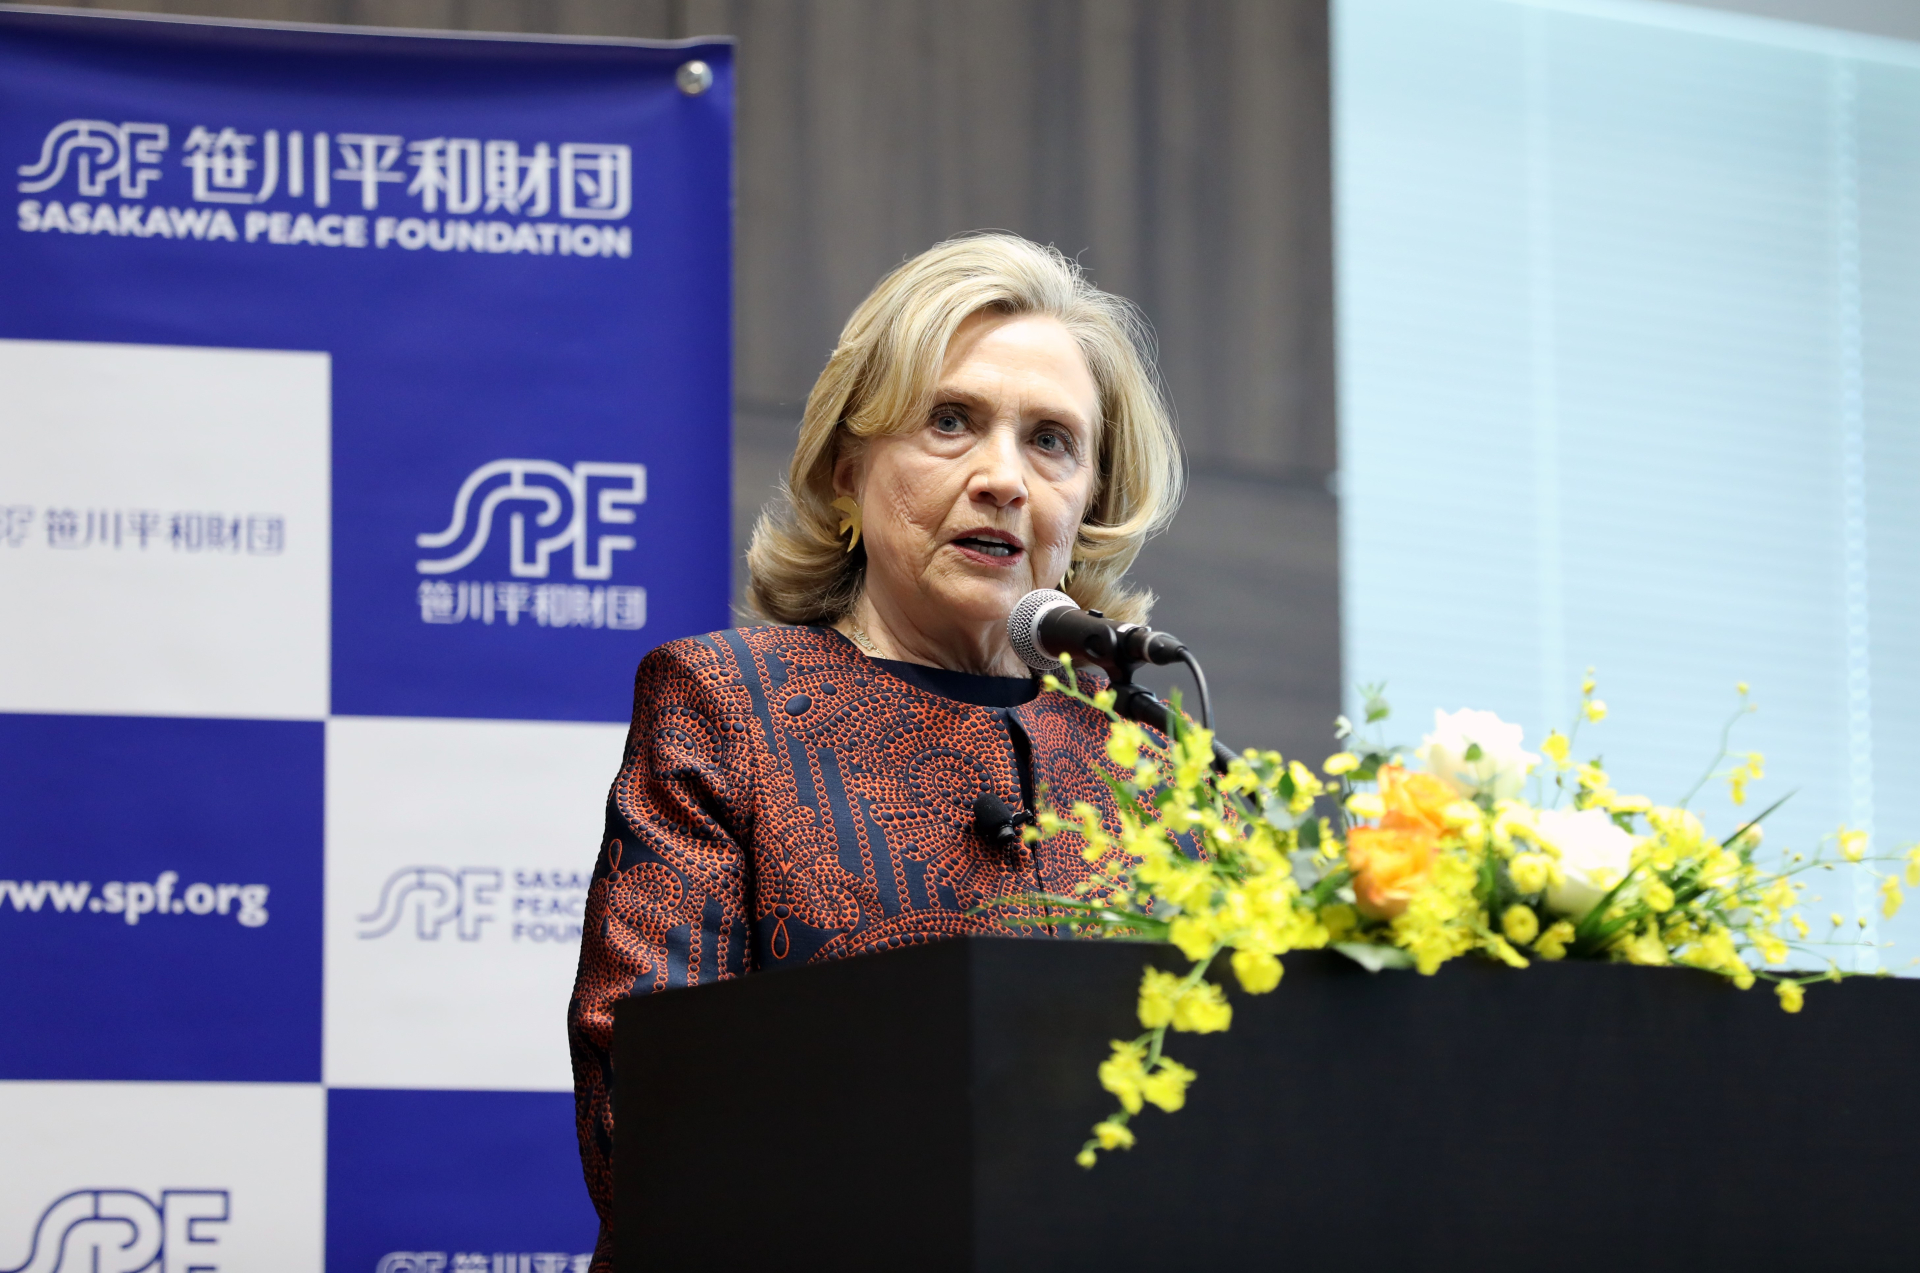 Hillary Rodham Clinton at SPF event on progress toward gender equality